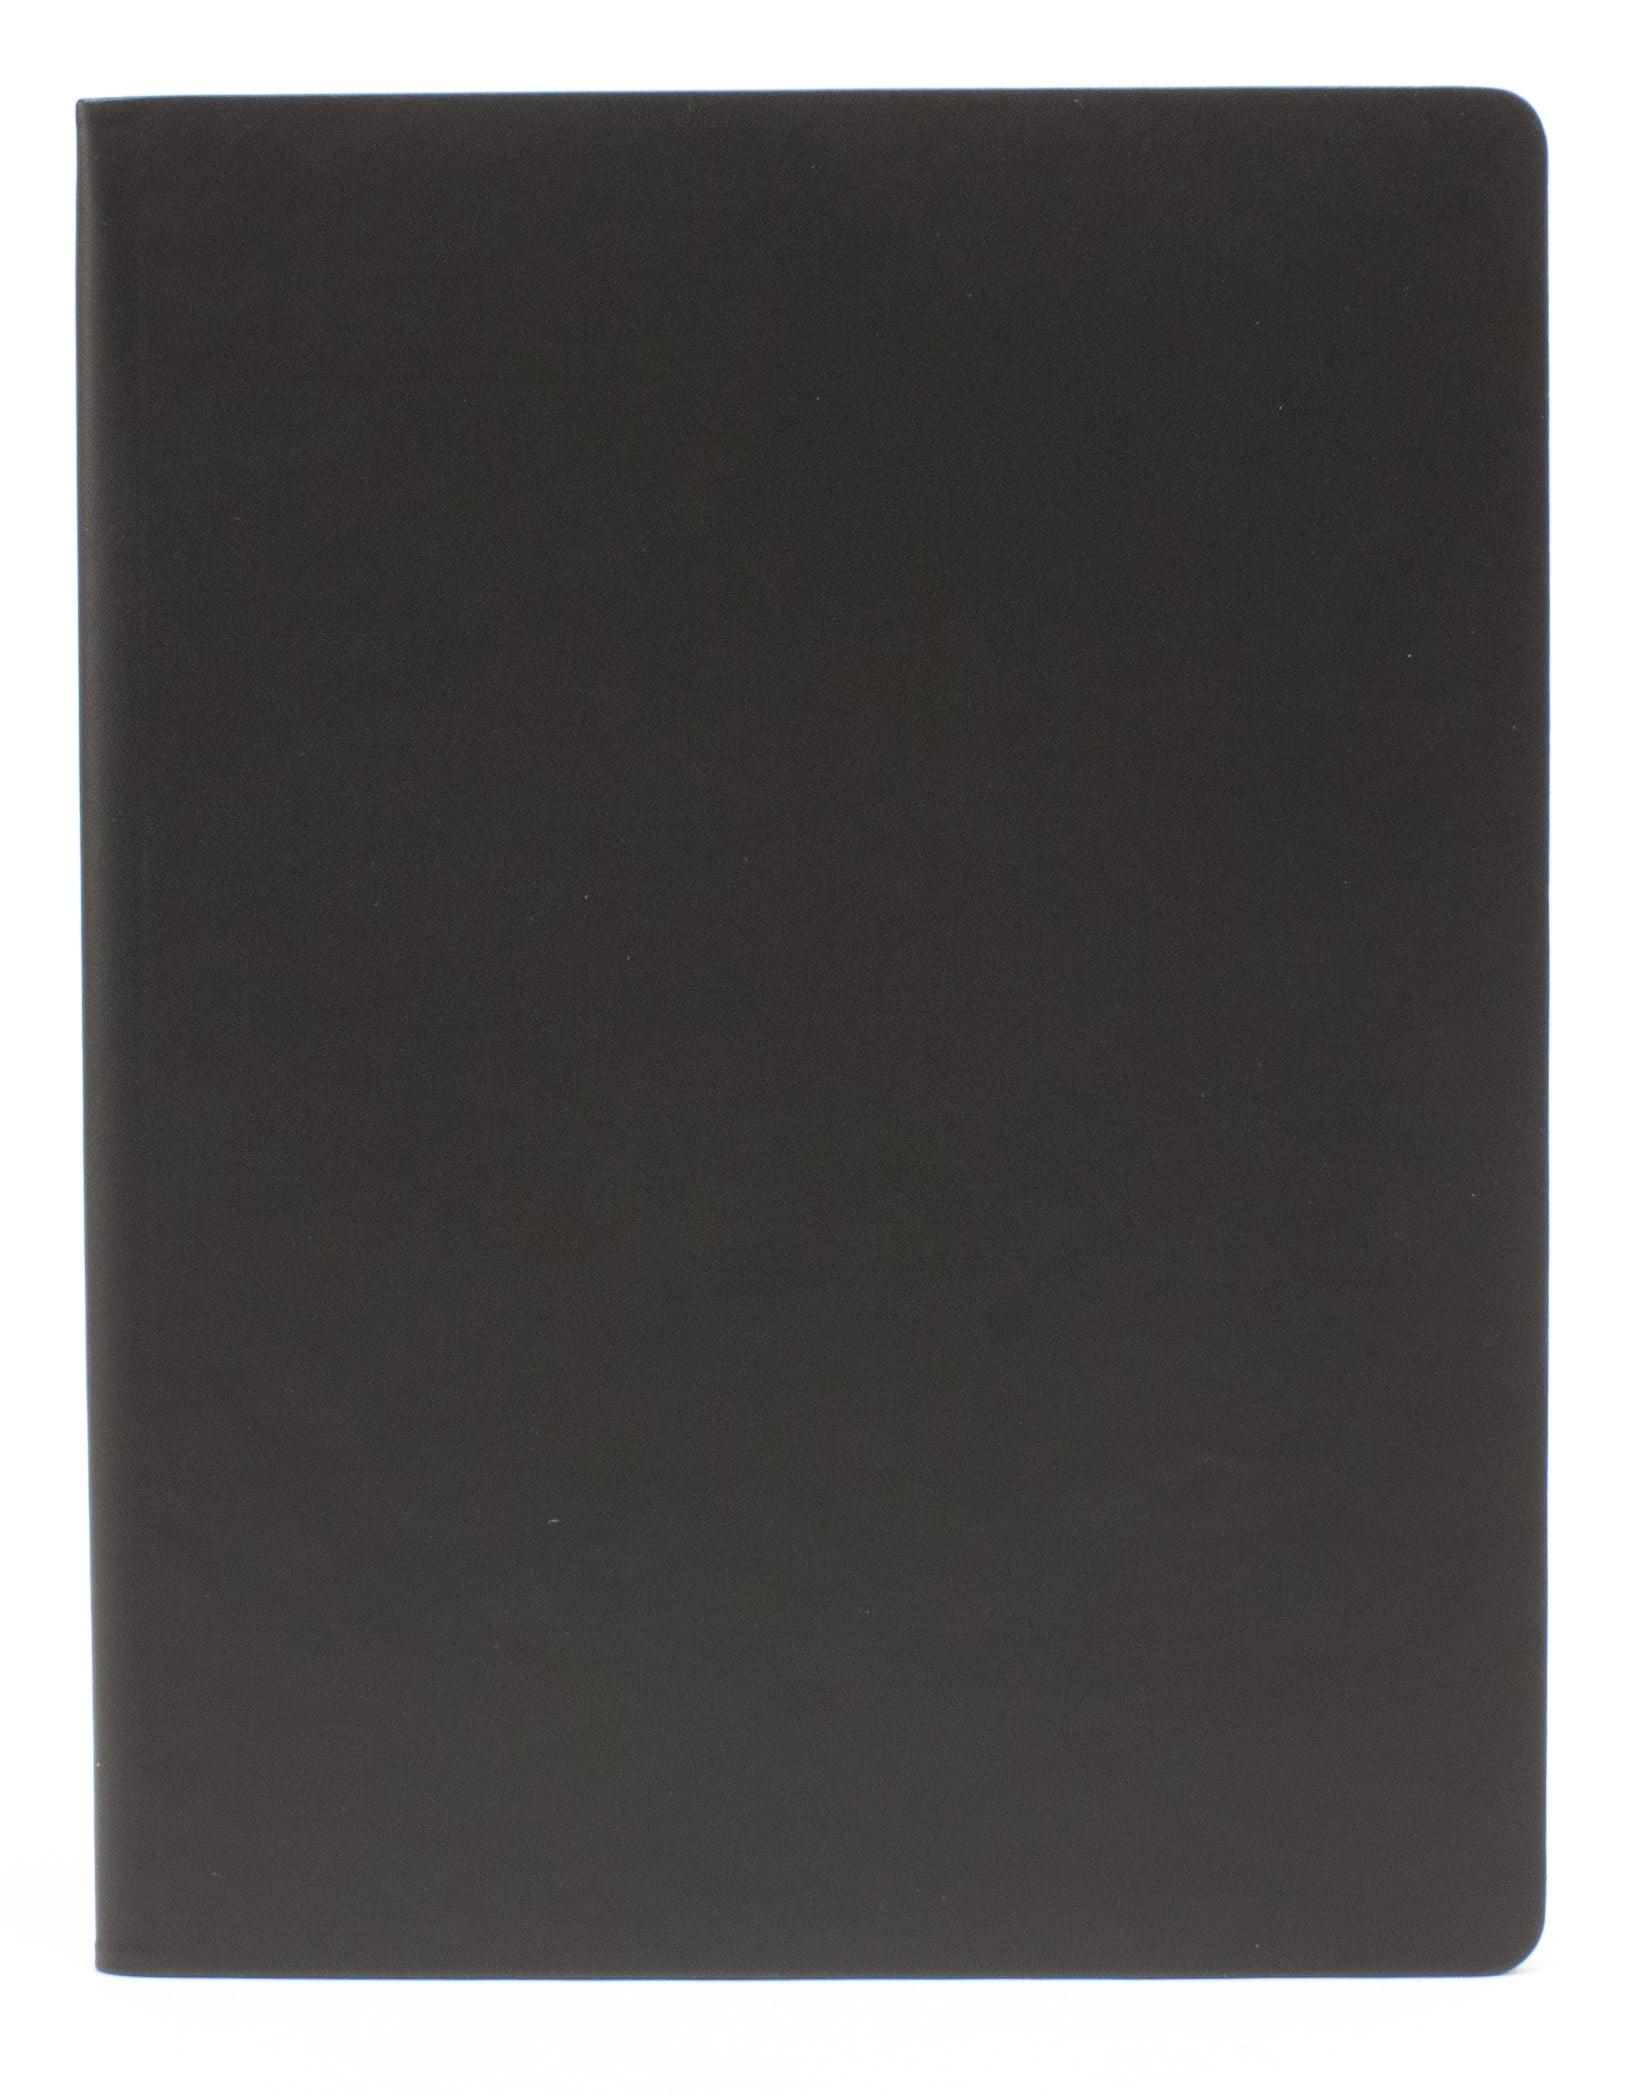 Black/Carbon Fiber M-edge Slim Hardshell Folio Case For Apple iPad 2/3/4 